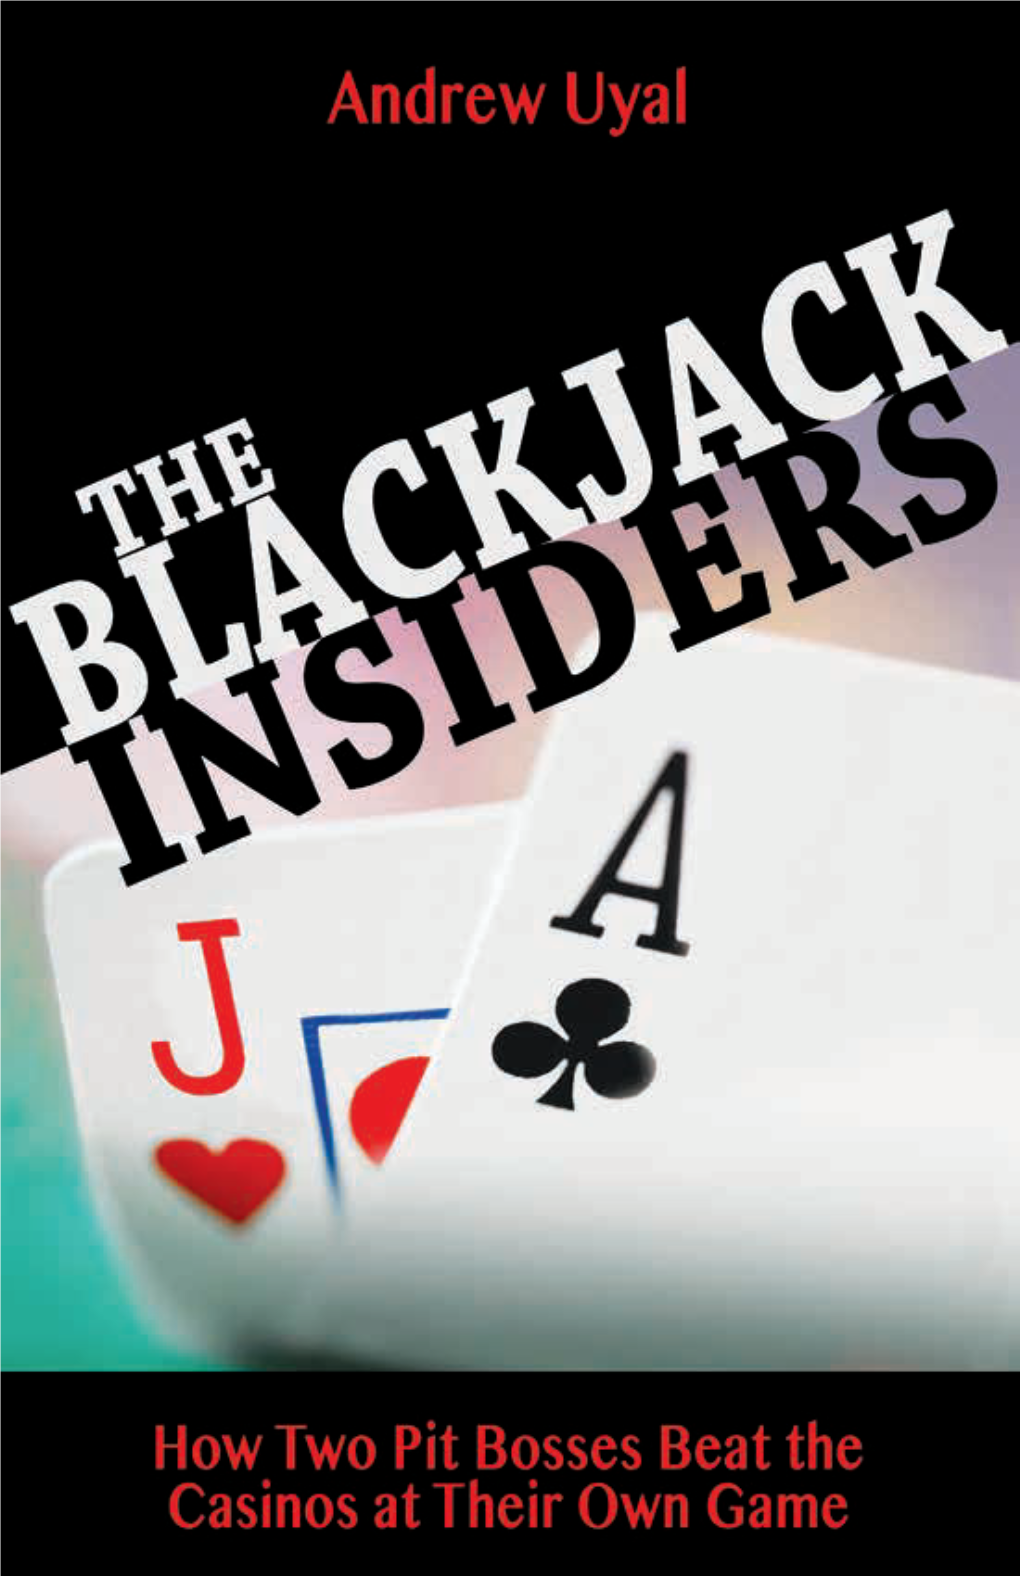 The Blackjack Insiders